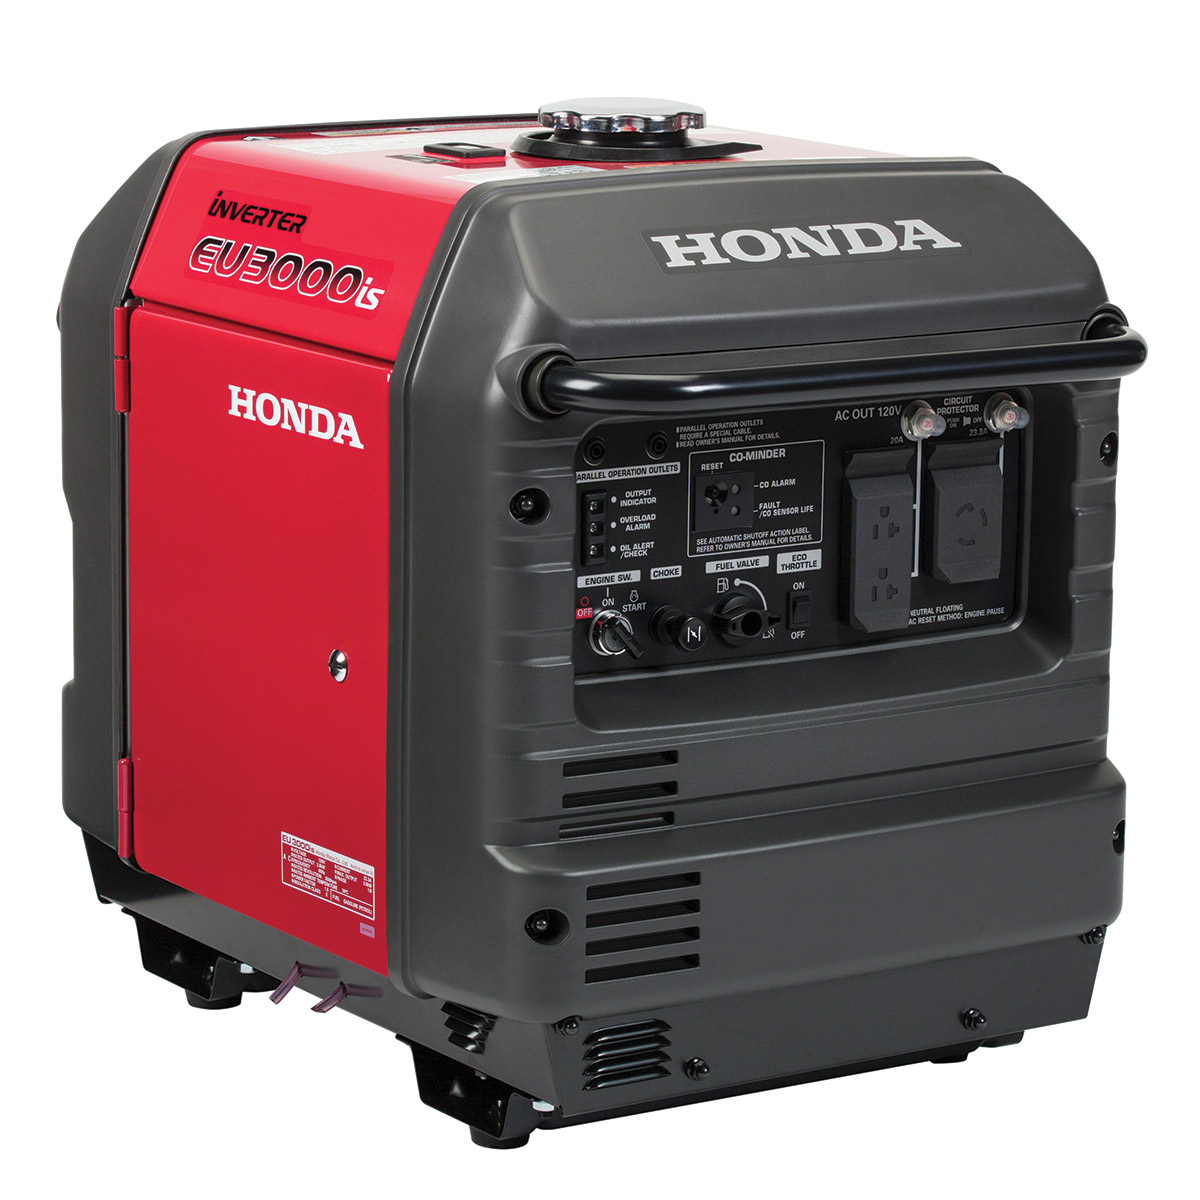 How To Operate A Honda Backup Generator